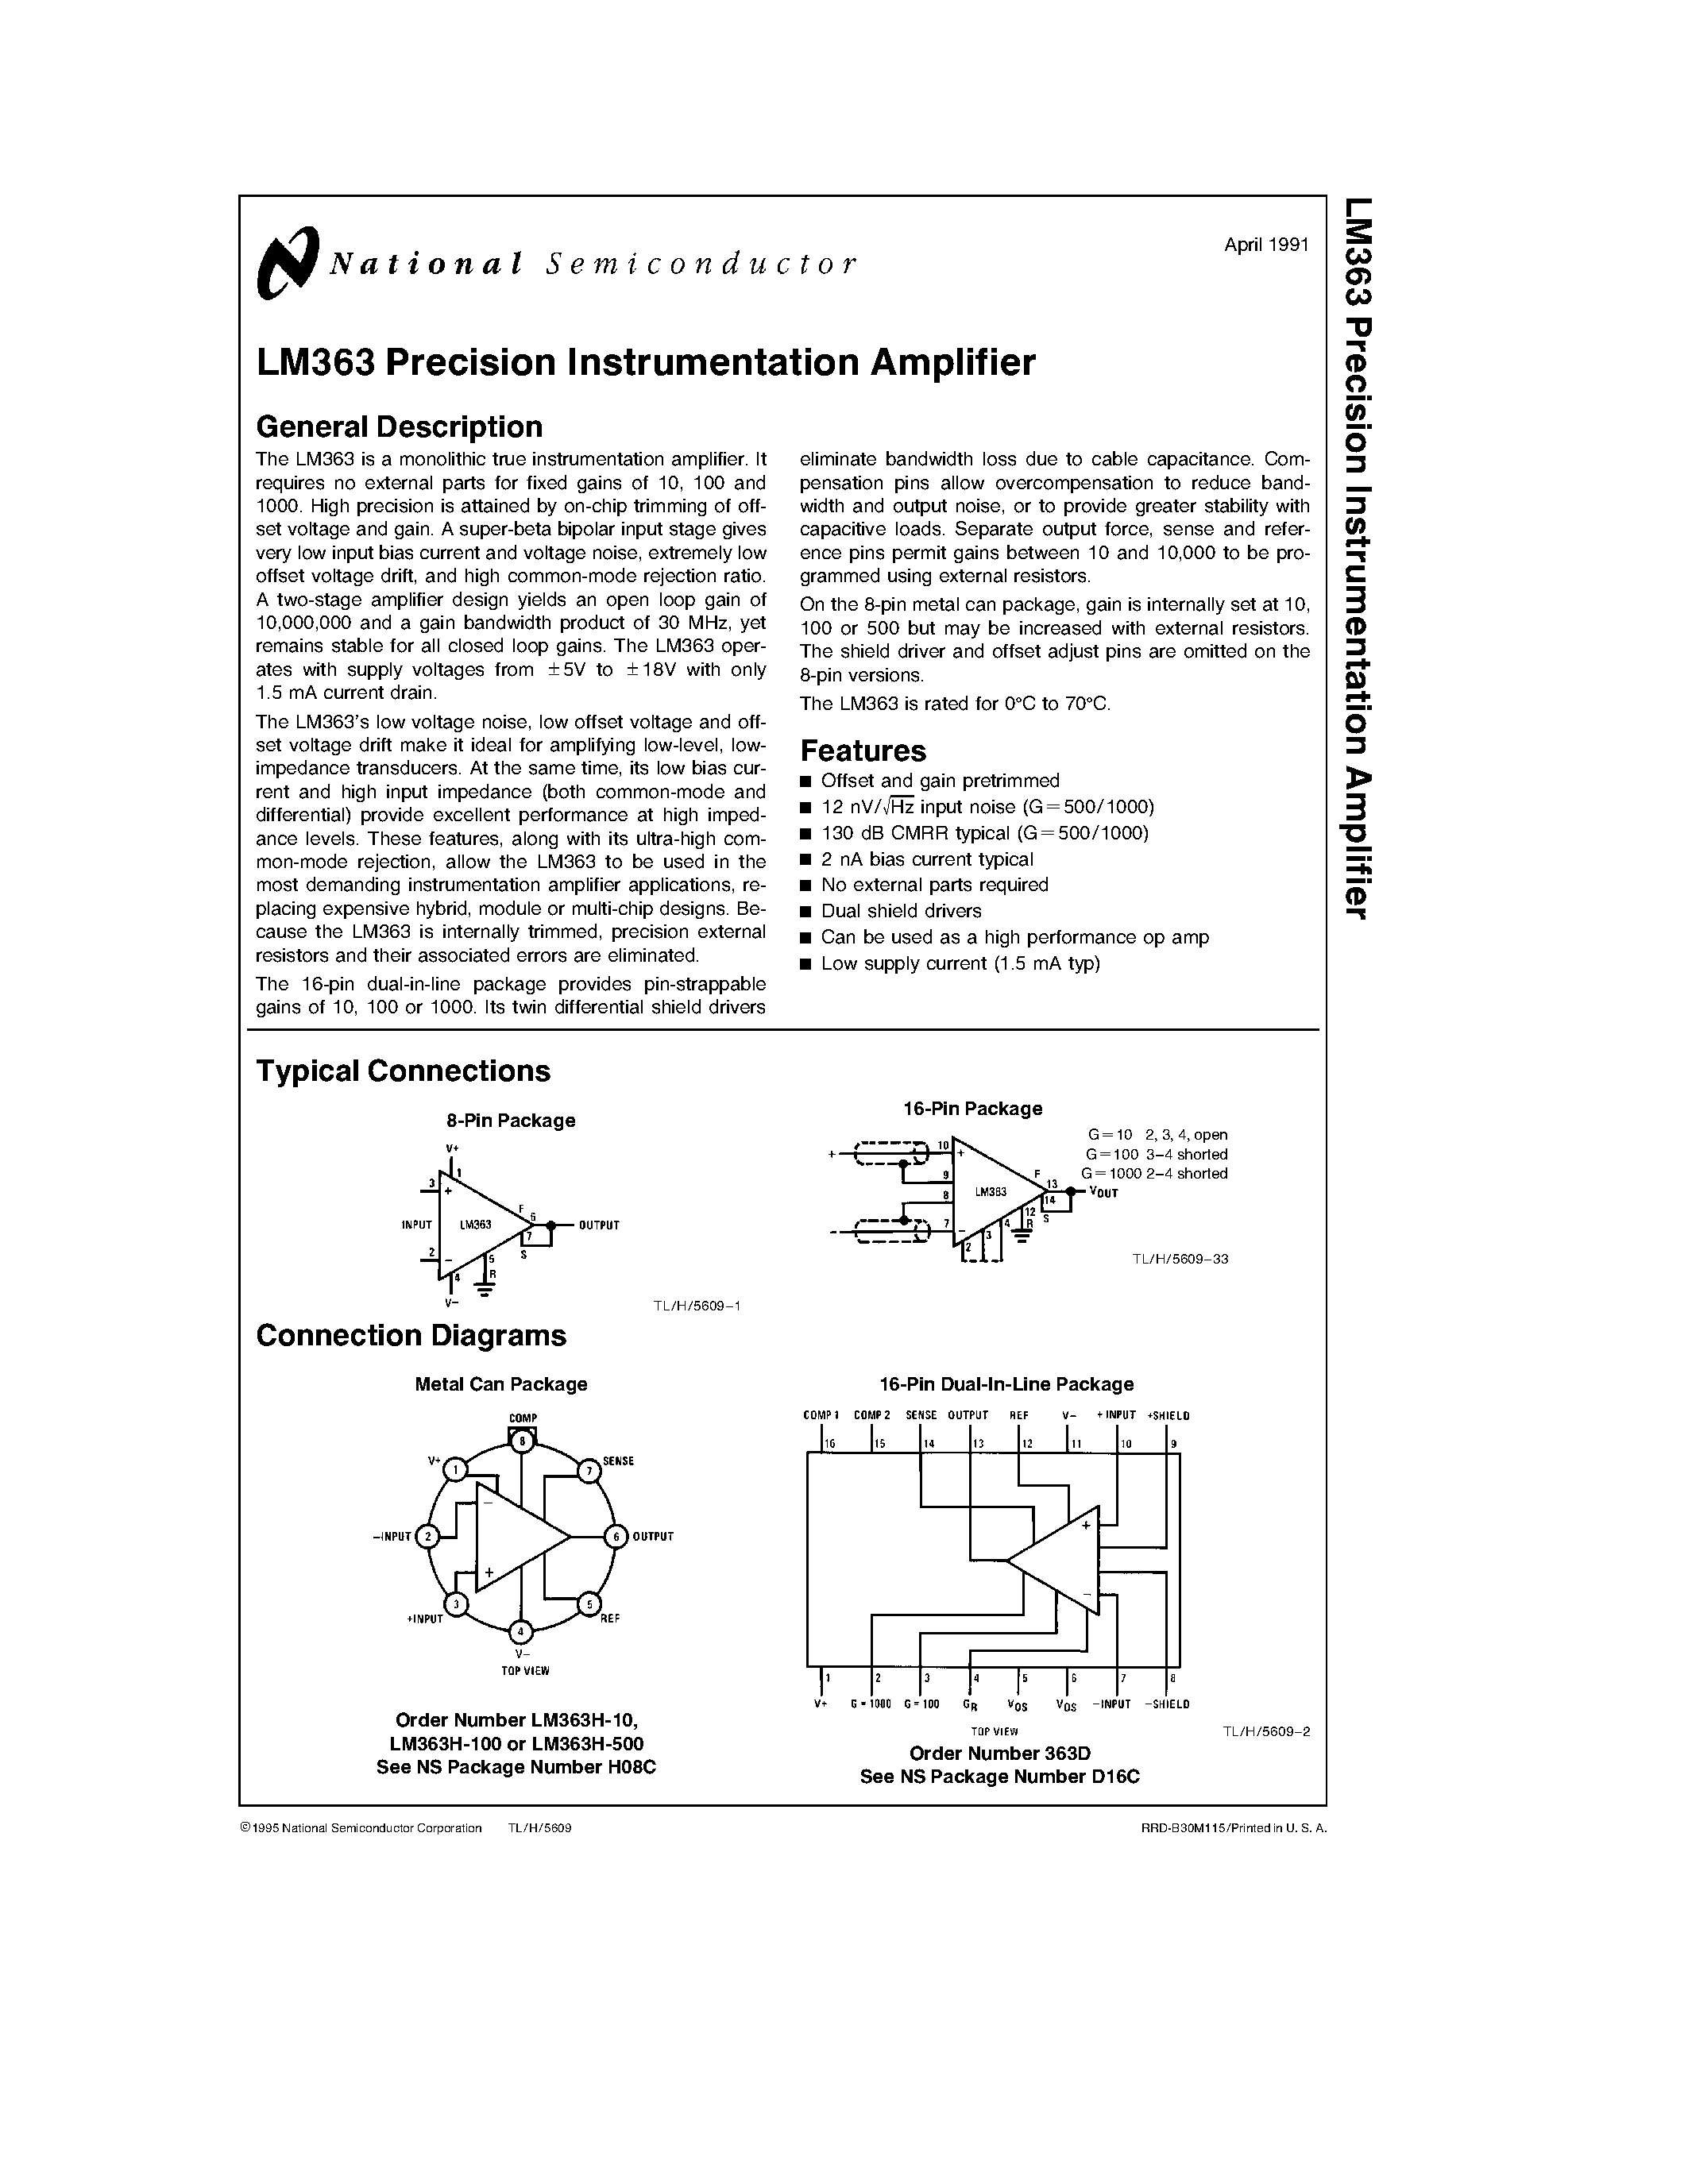 Datasheet 363D - LM363 Precision Instrumentation Amplifier page 1